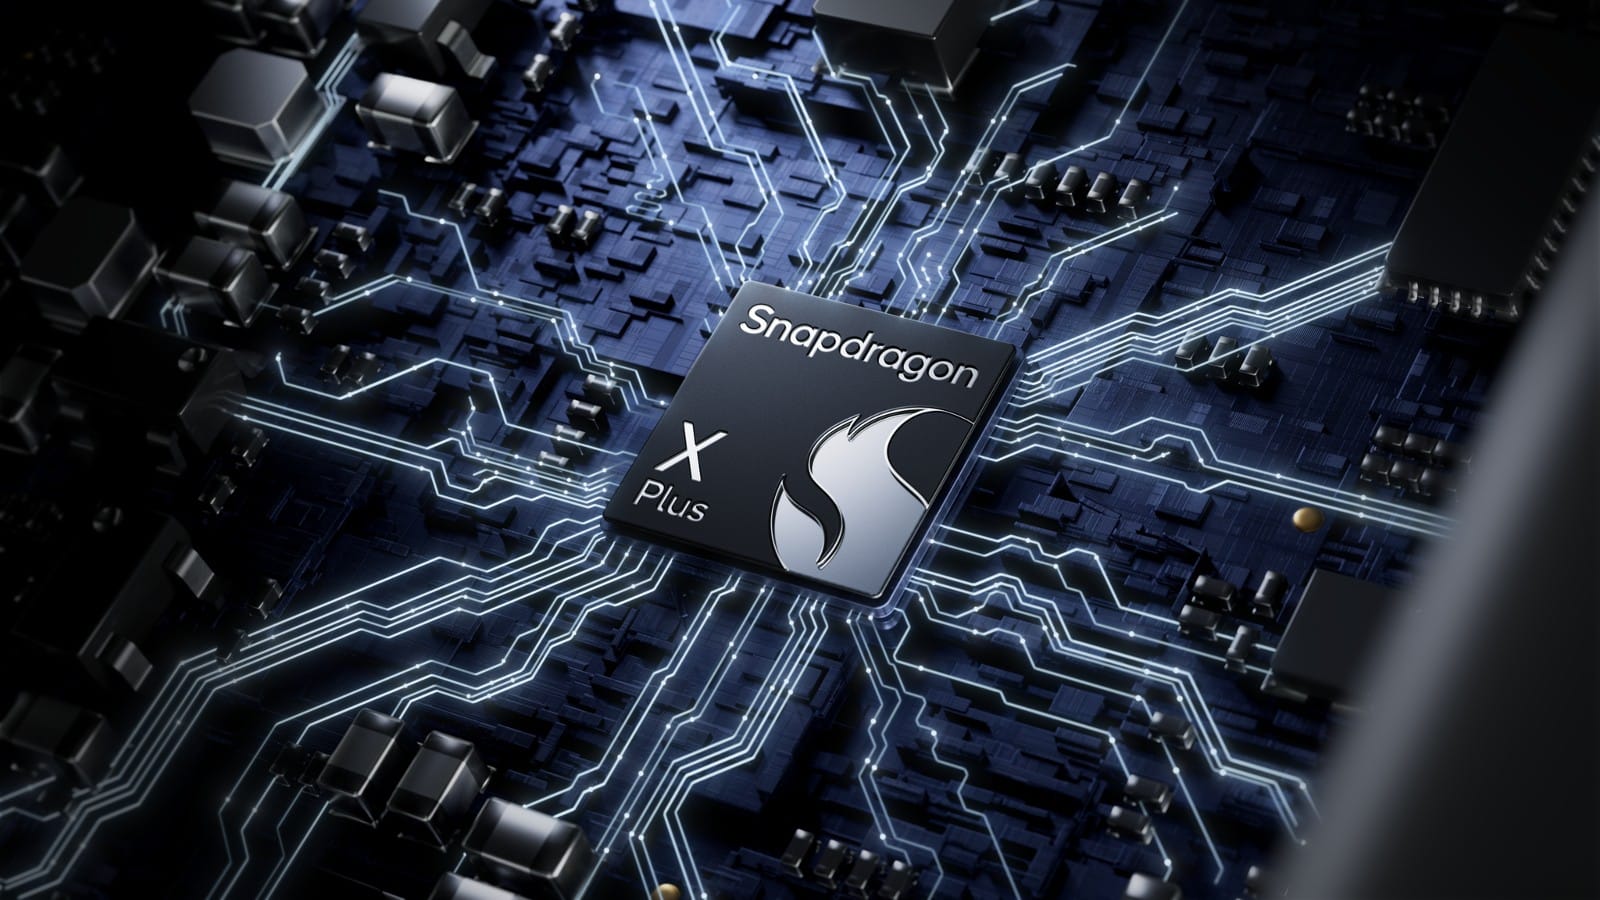 Snapdragon X Plus, Snapdragon X Plus: 10πύρηνη CPU, ίδια GPU και NPU με τo Elite